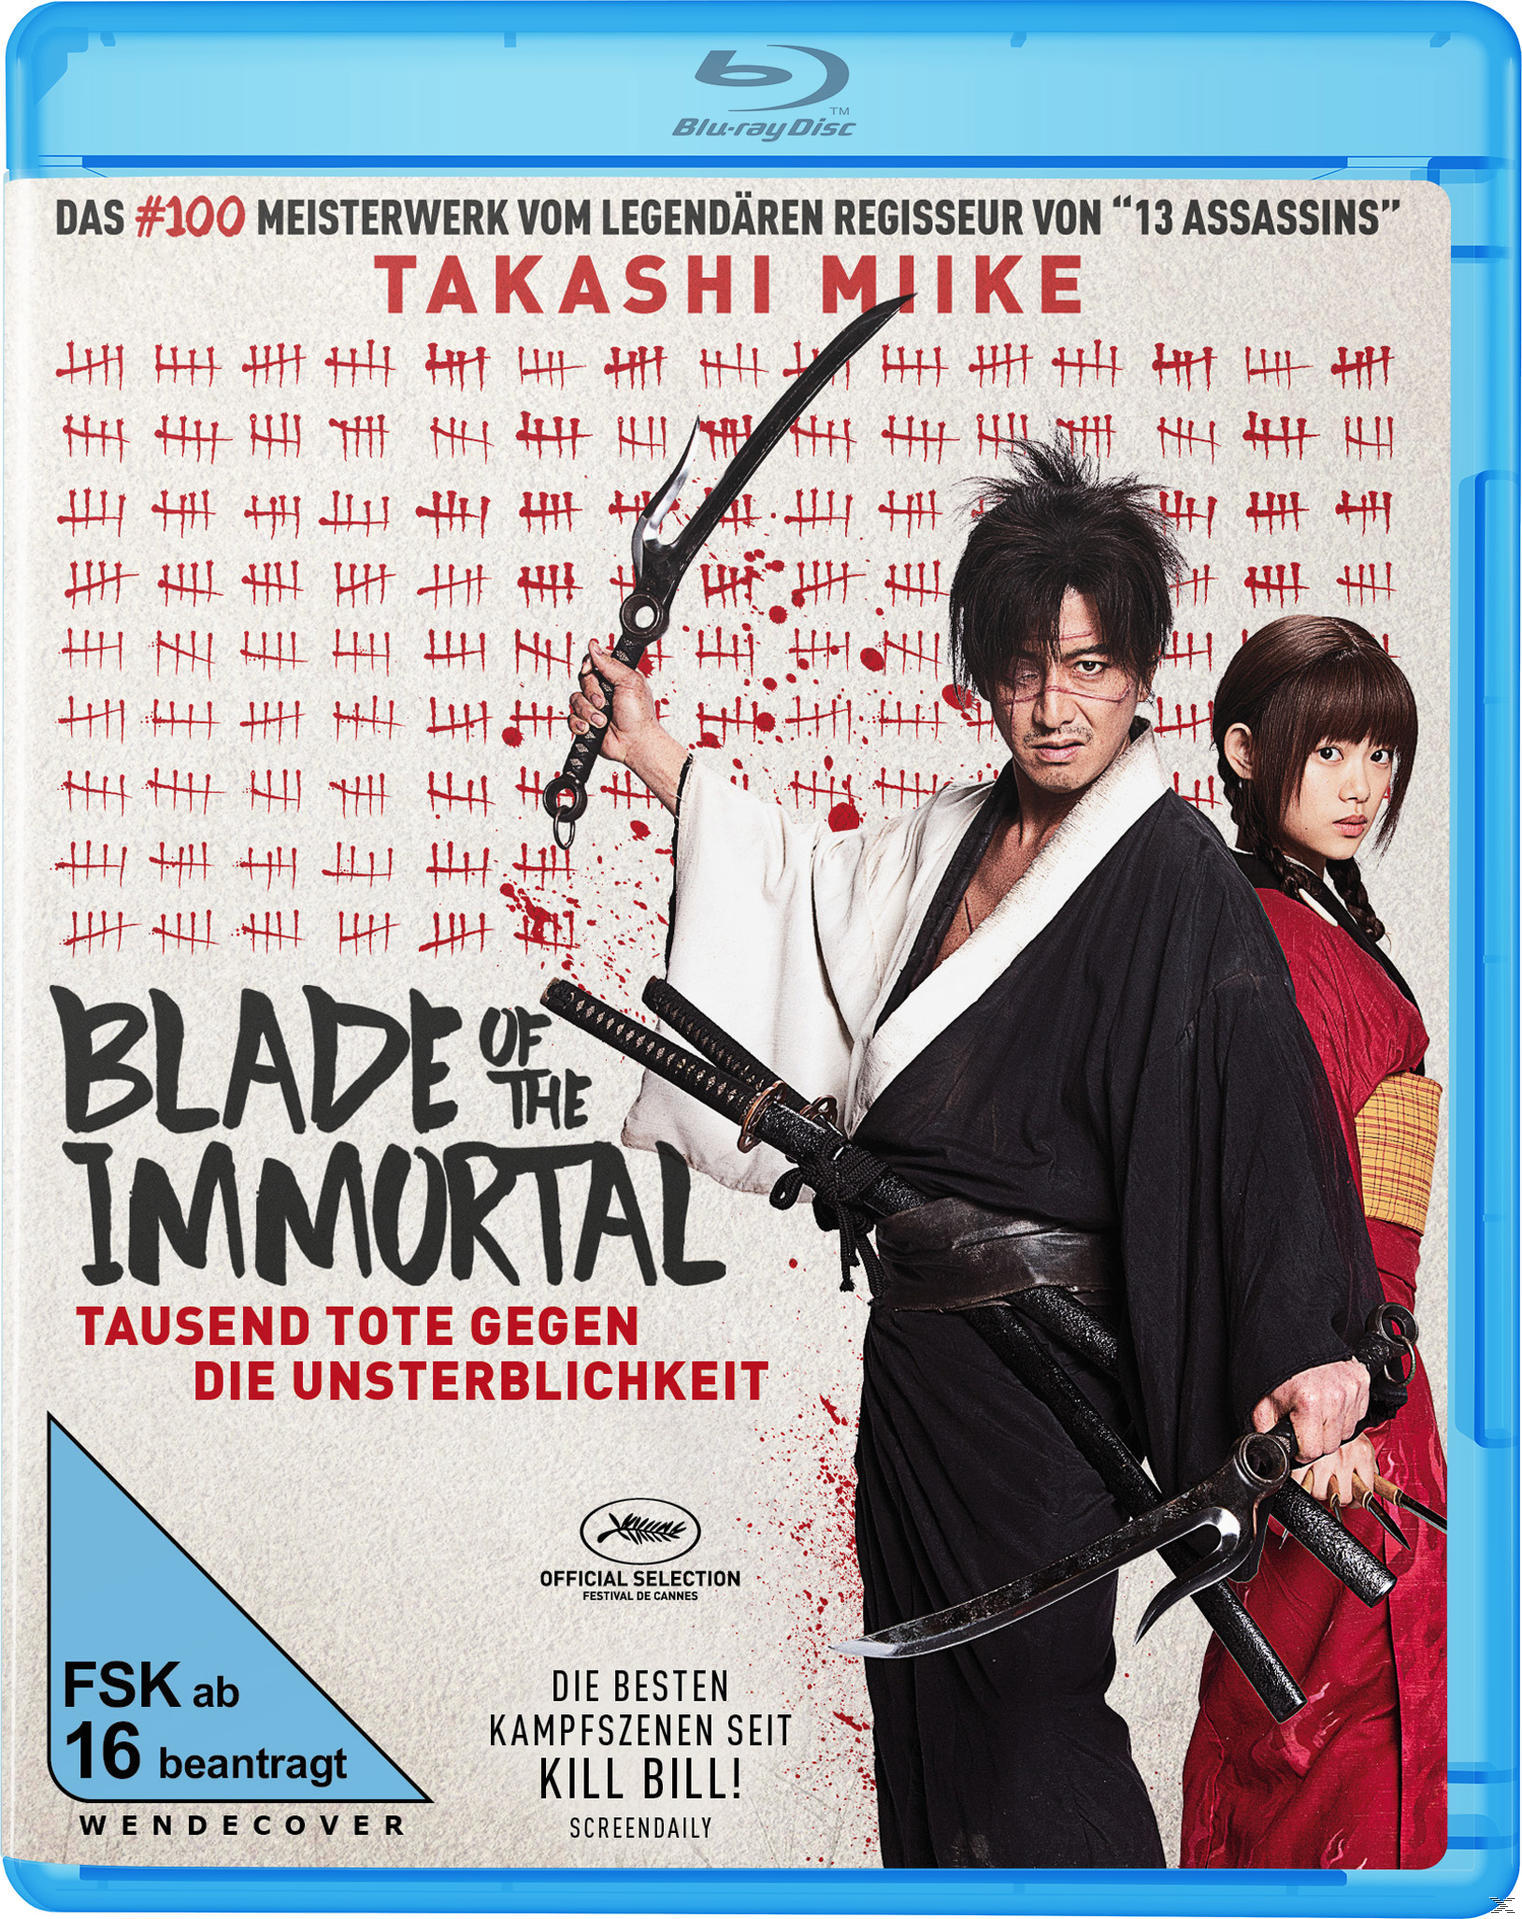 the Blu-ray of Blade Immortal